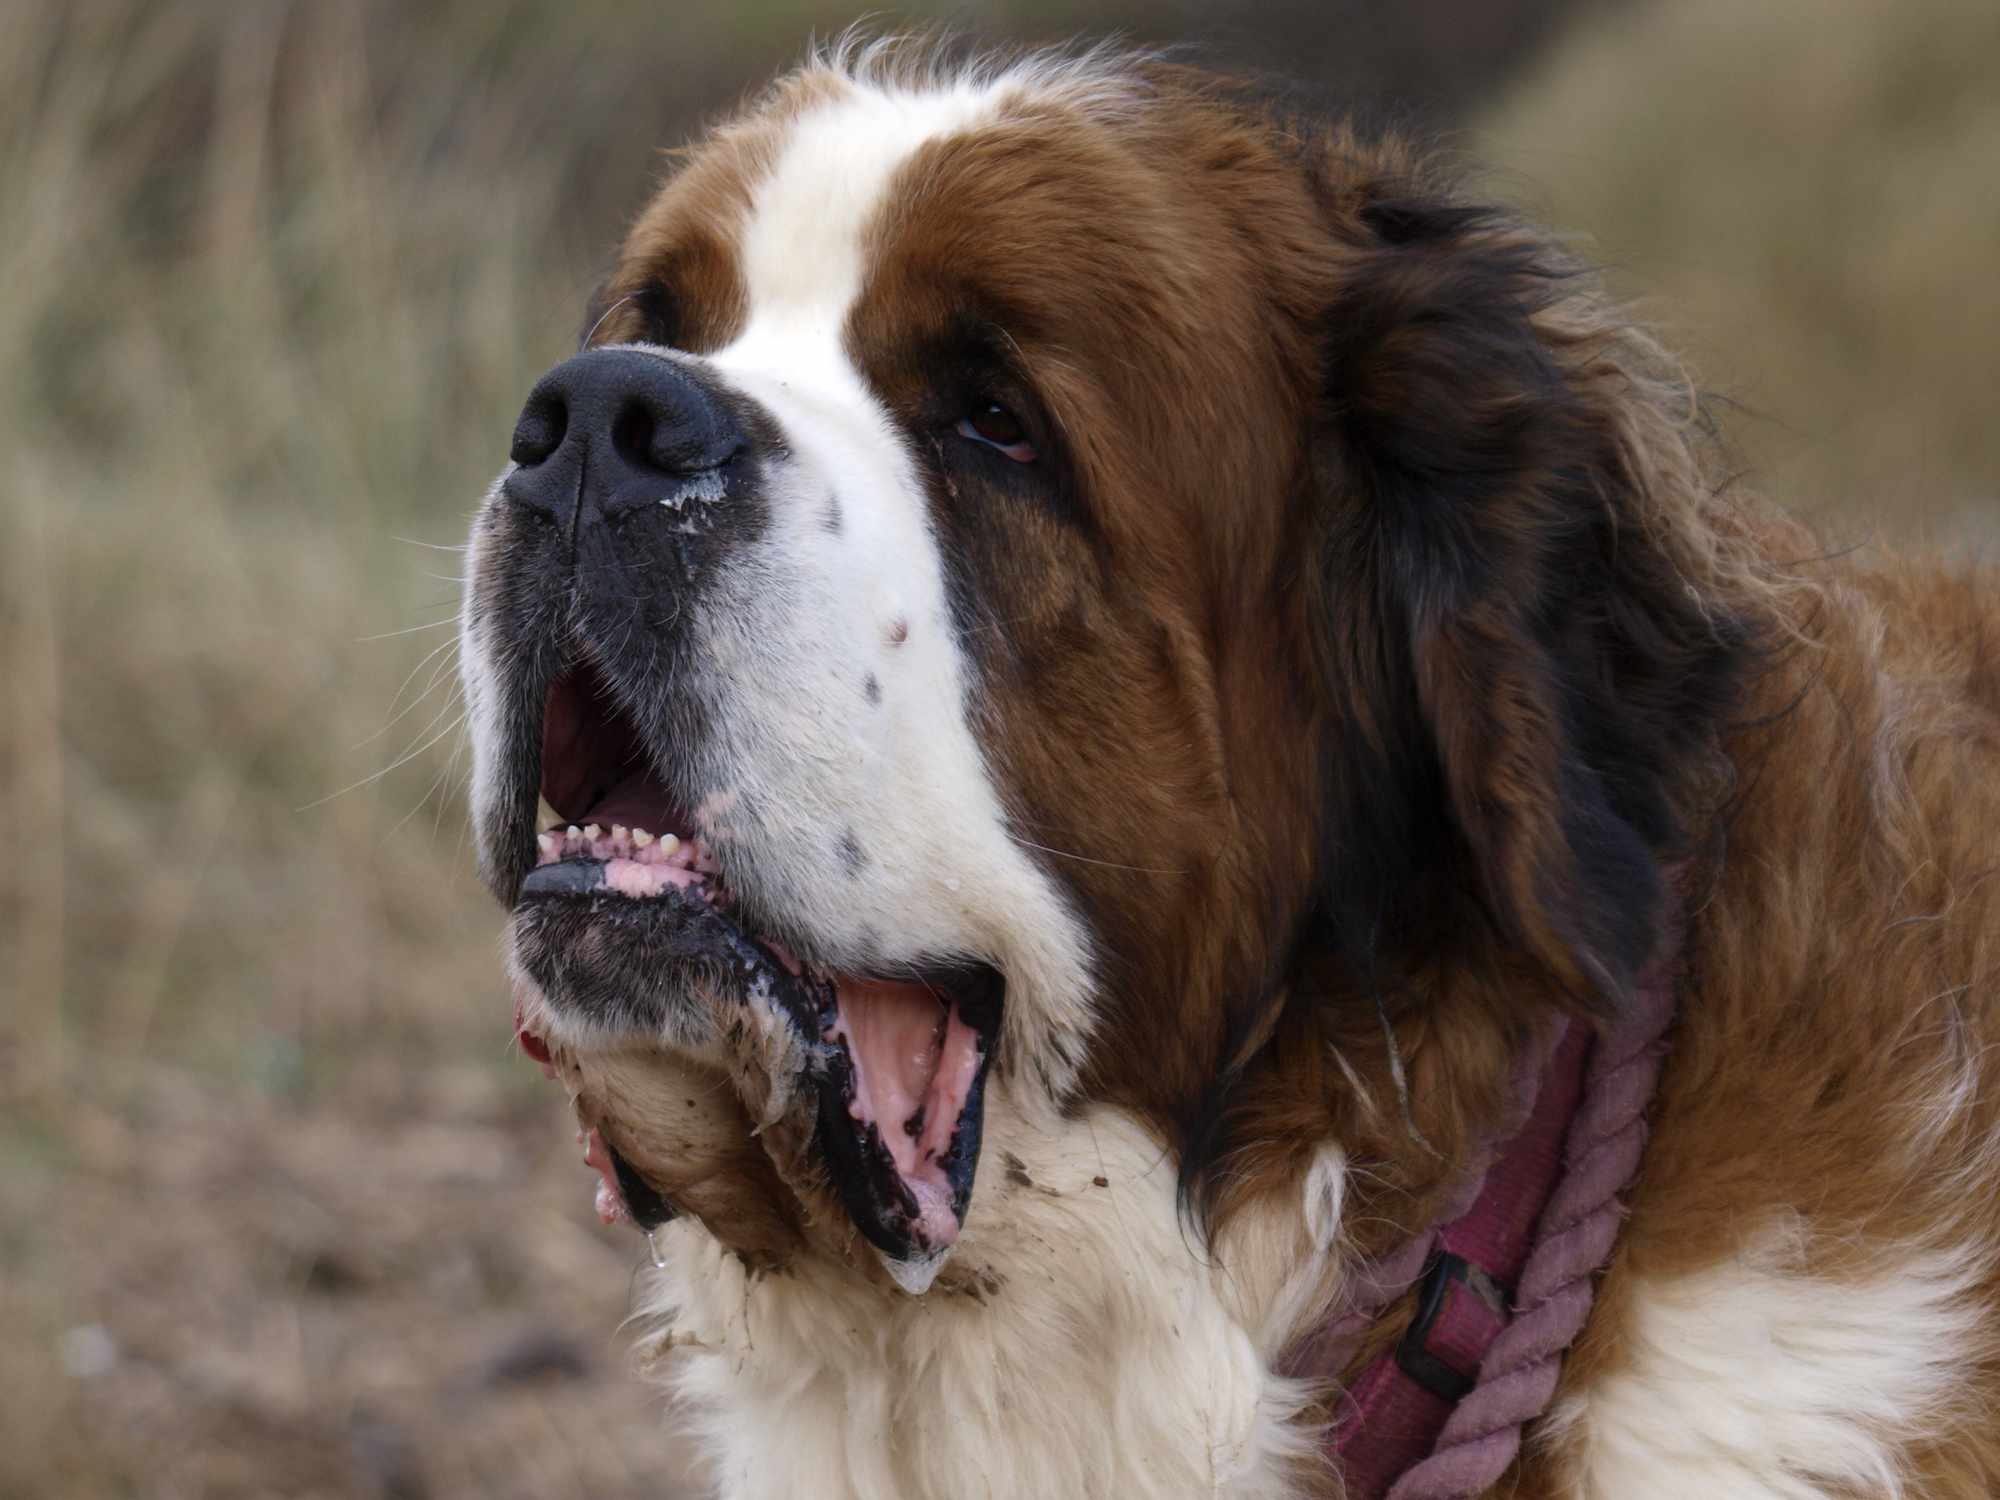 A Profile shot of a Saint Bernard dog drooling